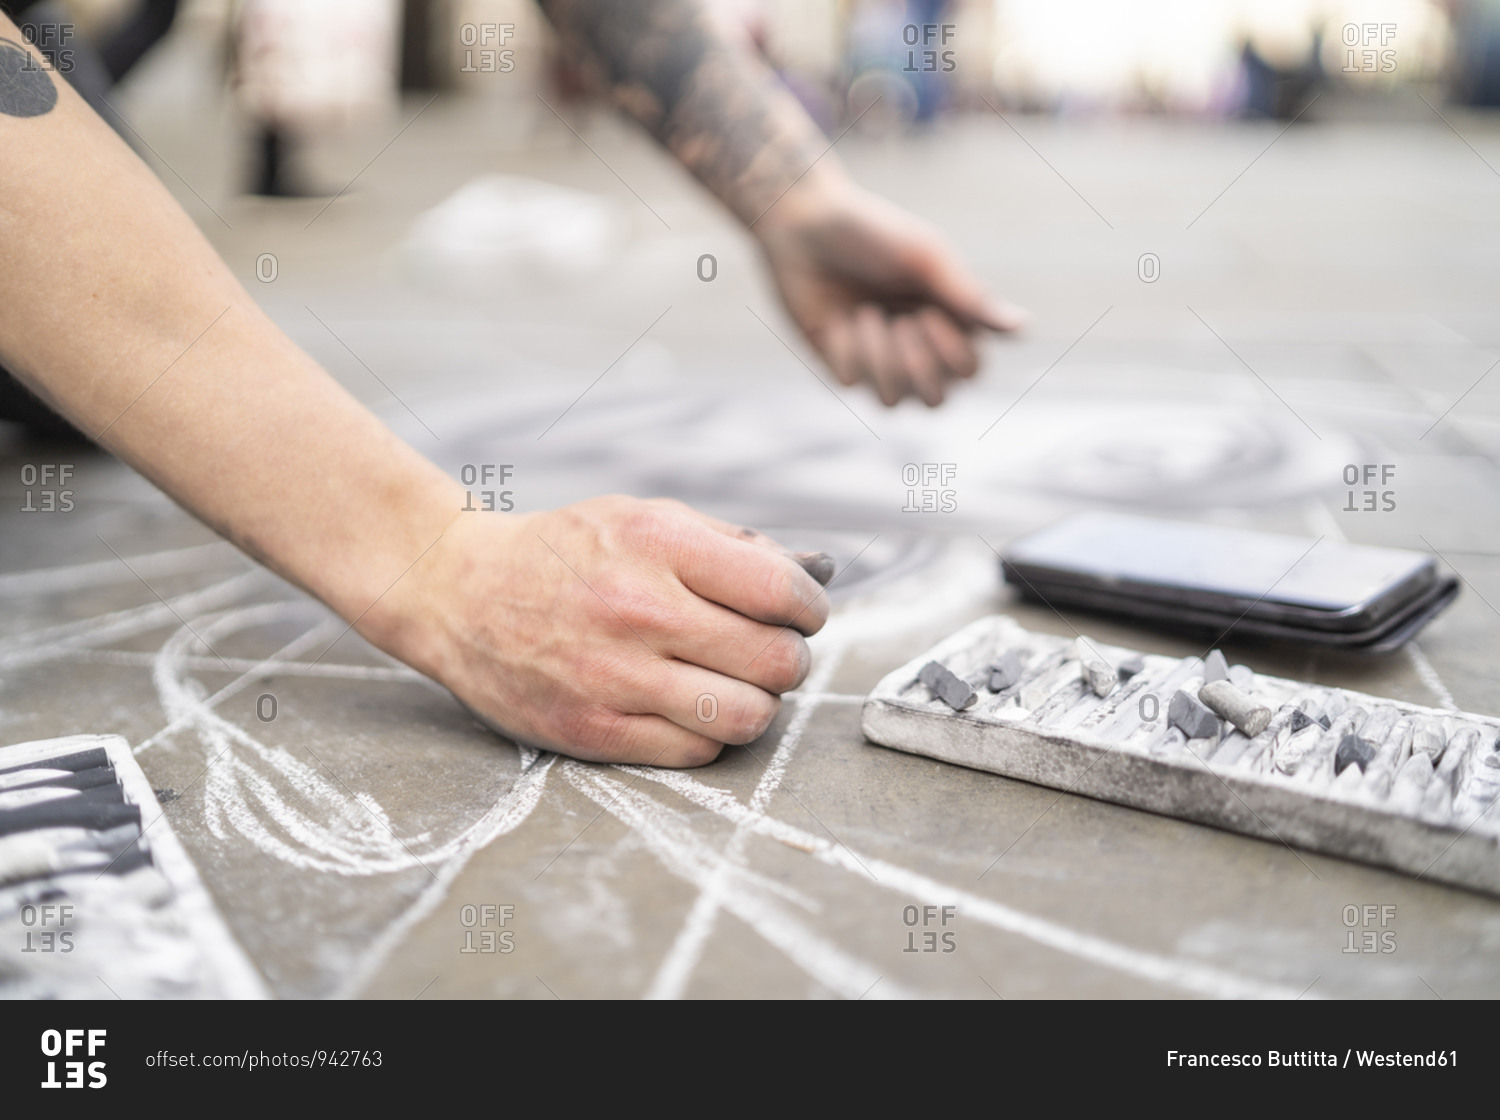 Street art- pavement artist drawing on pavement and using smartphone